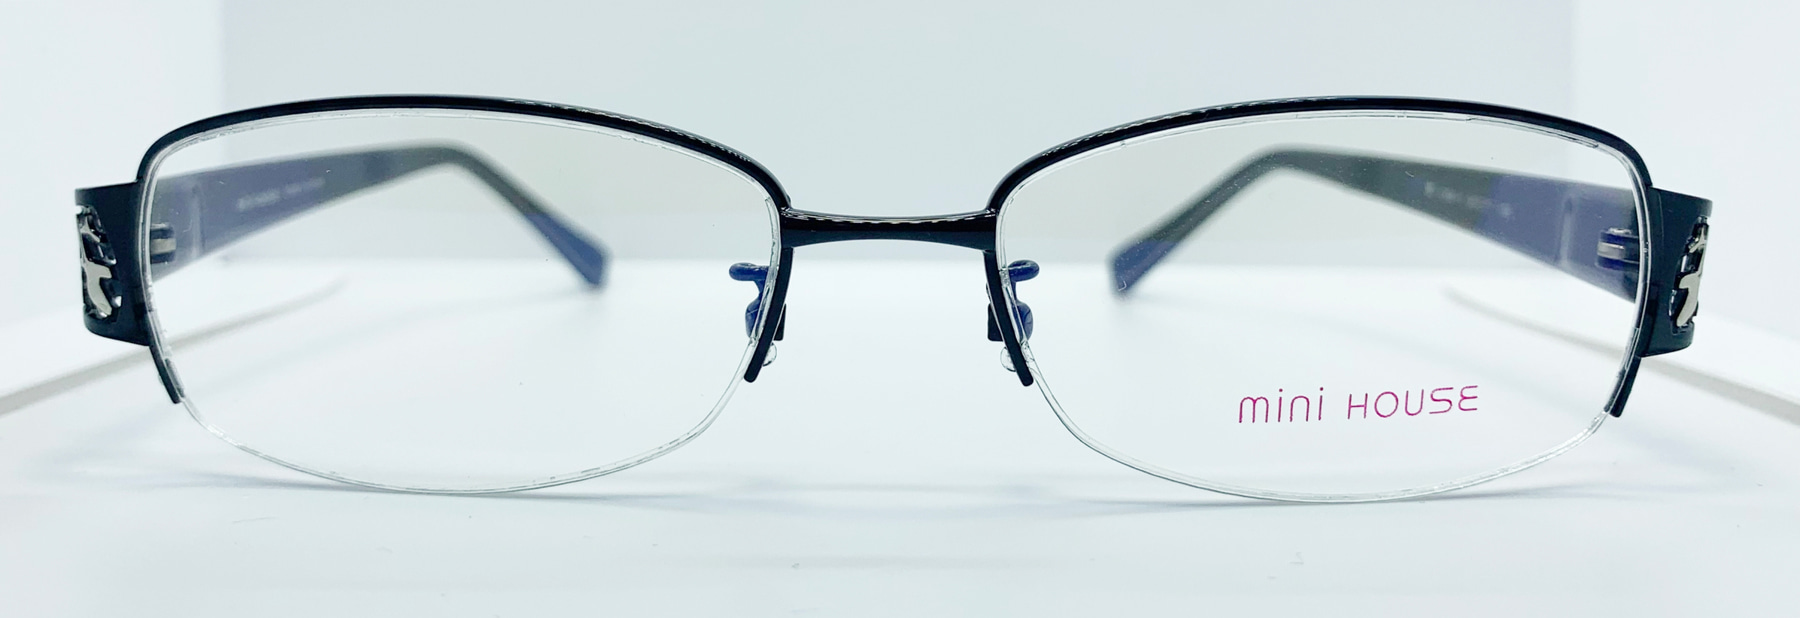 MINIHOUSE M-1004-1, Korean glasses, sunglasses, eyeglasses, glasses